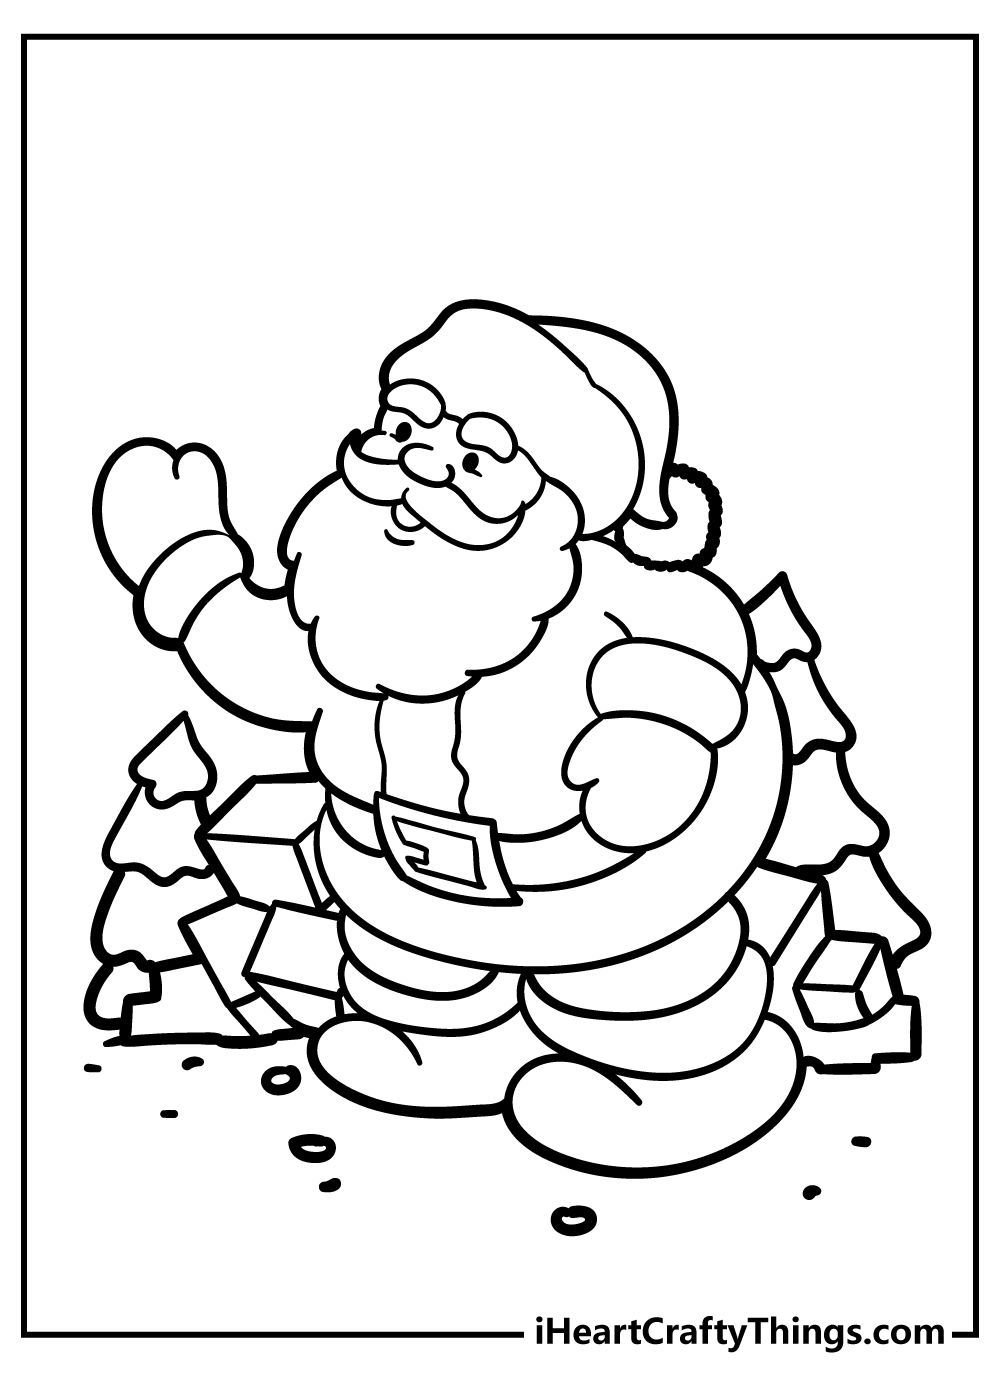 Cute Santa Christmas Coloring Pages free pdf download